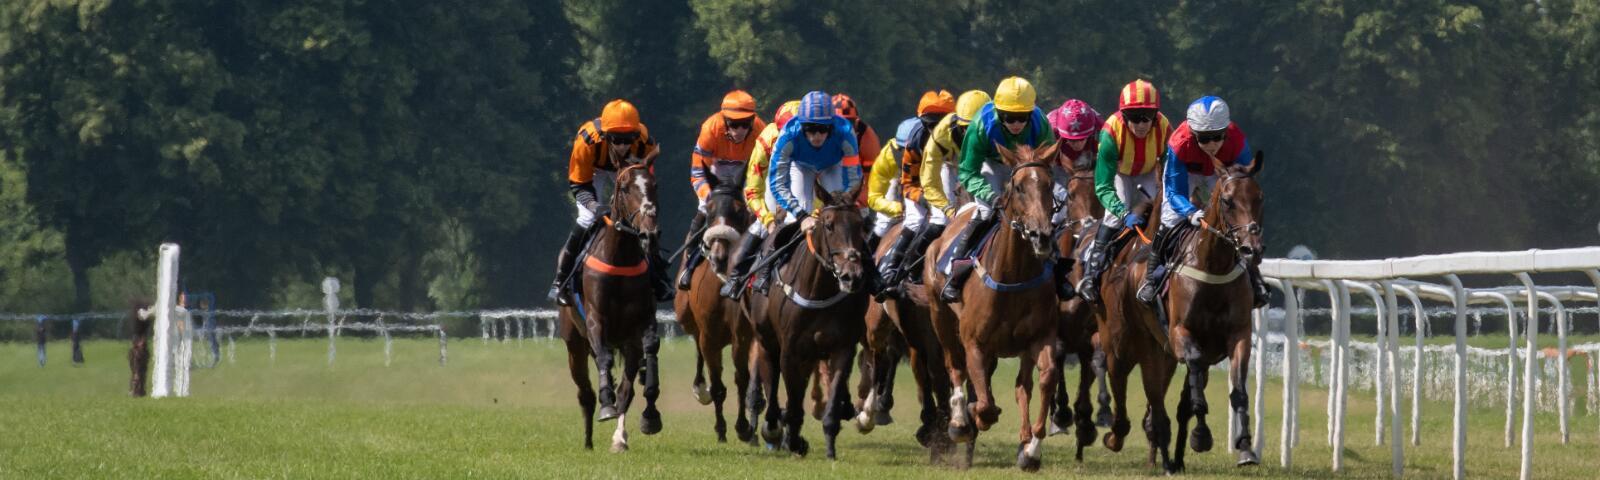 horses racing around a racecourse